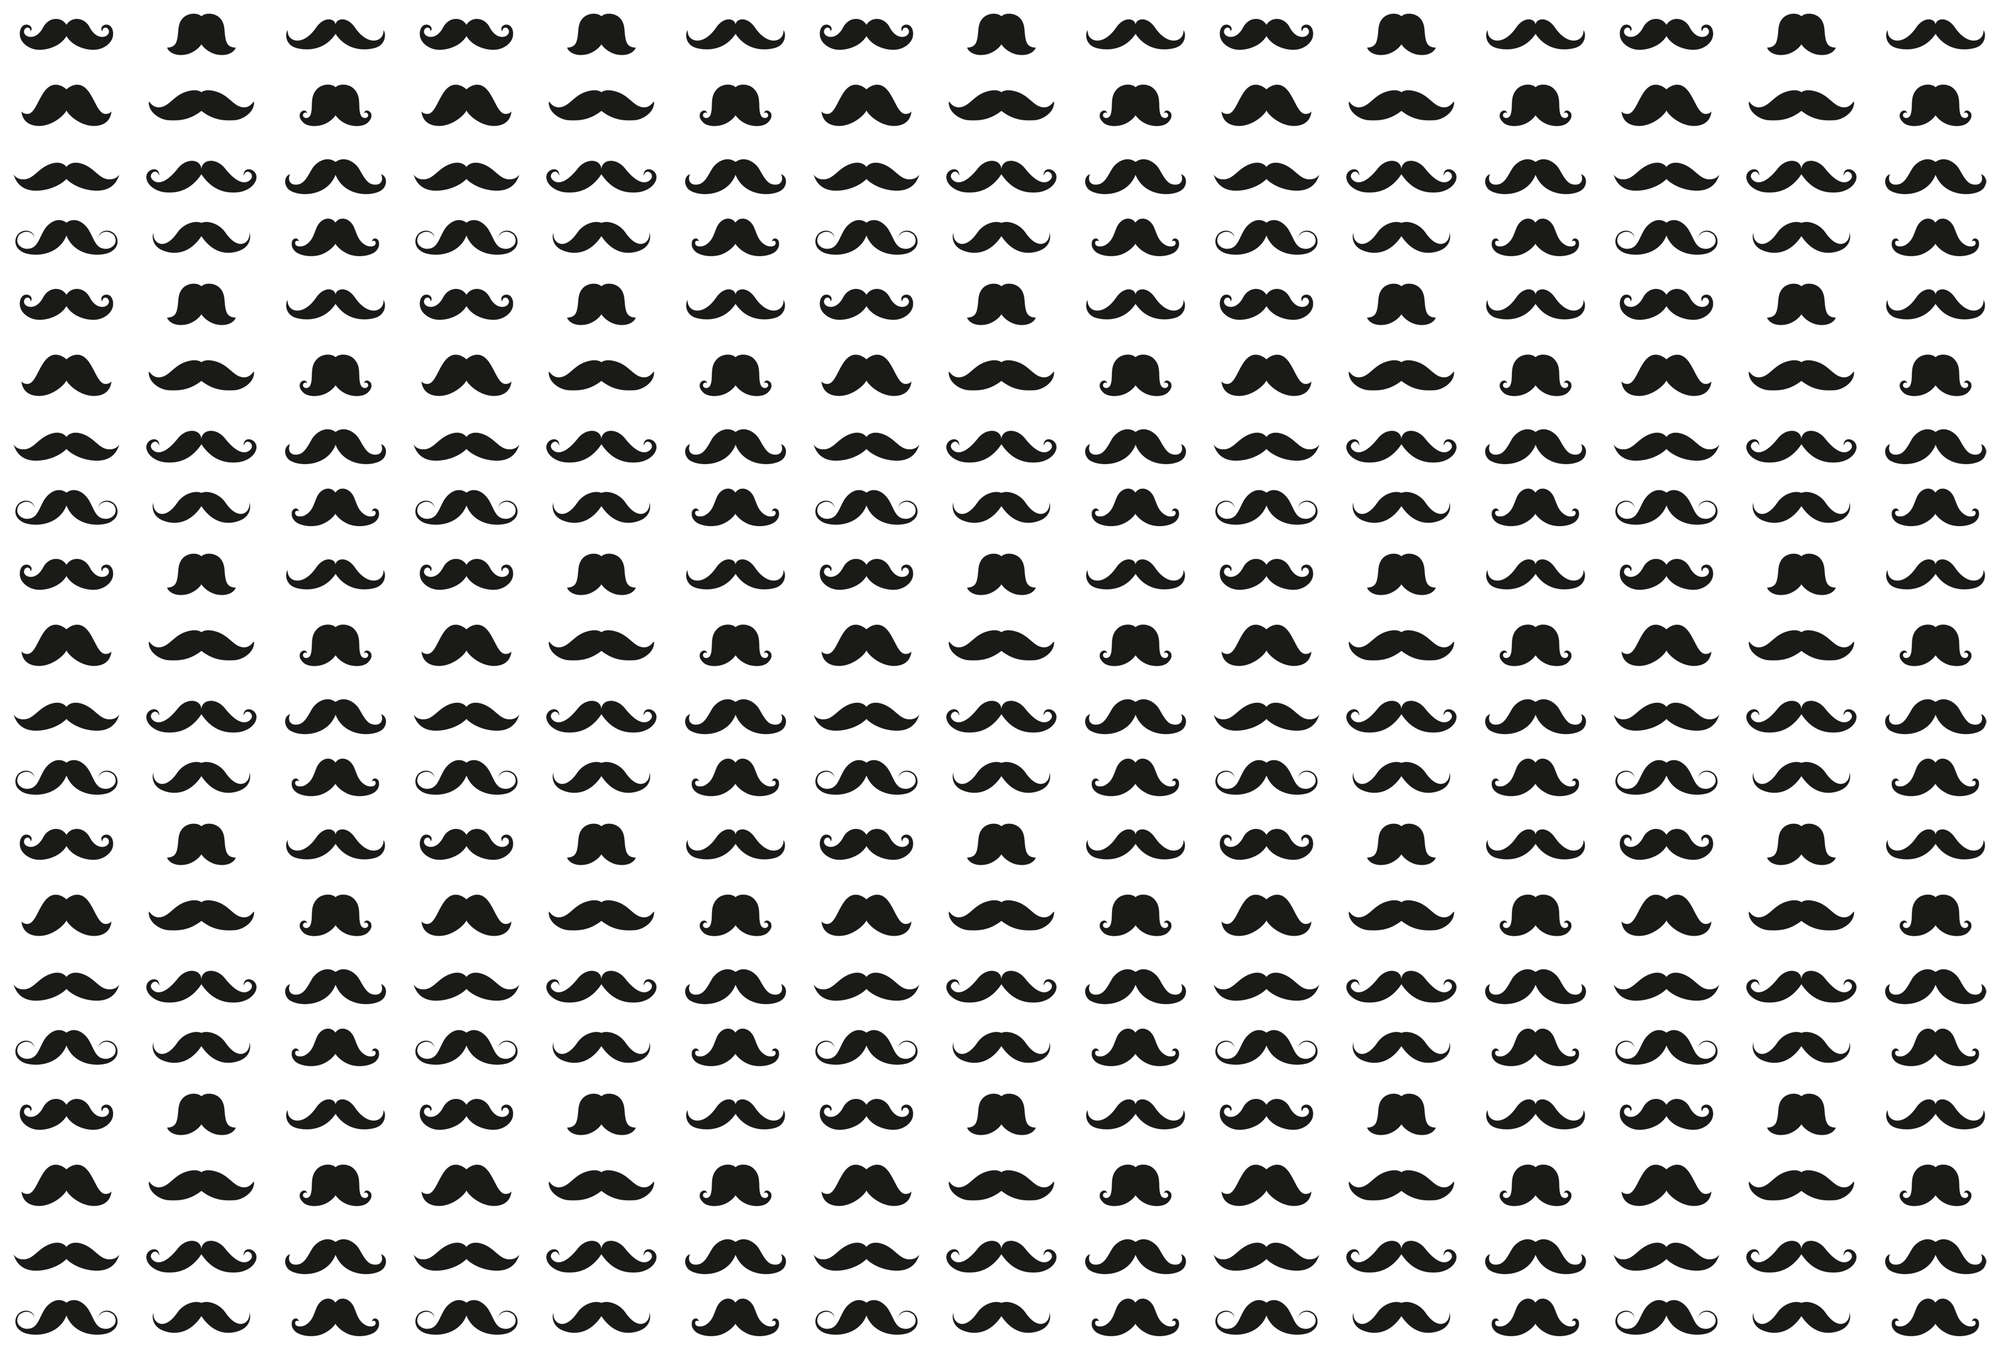             Photo wallpaper Mustache cool moustache motif - Black and white - Matt smooth fleece
        